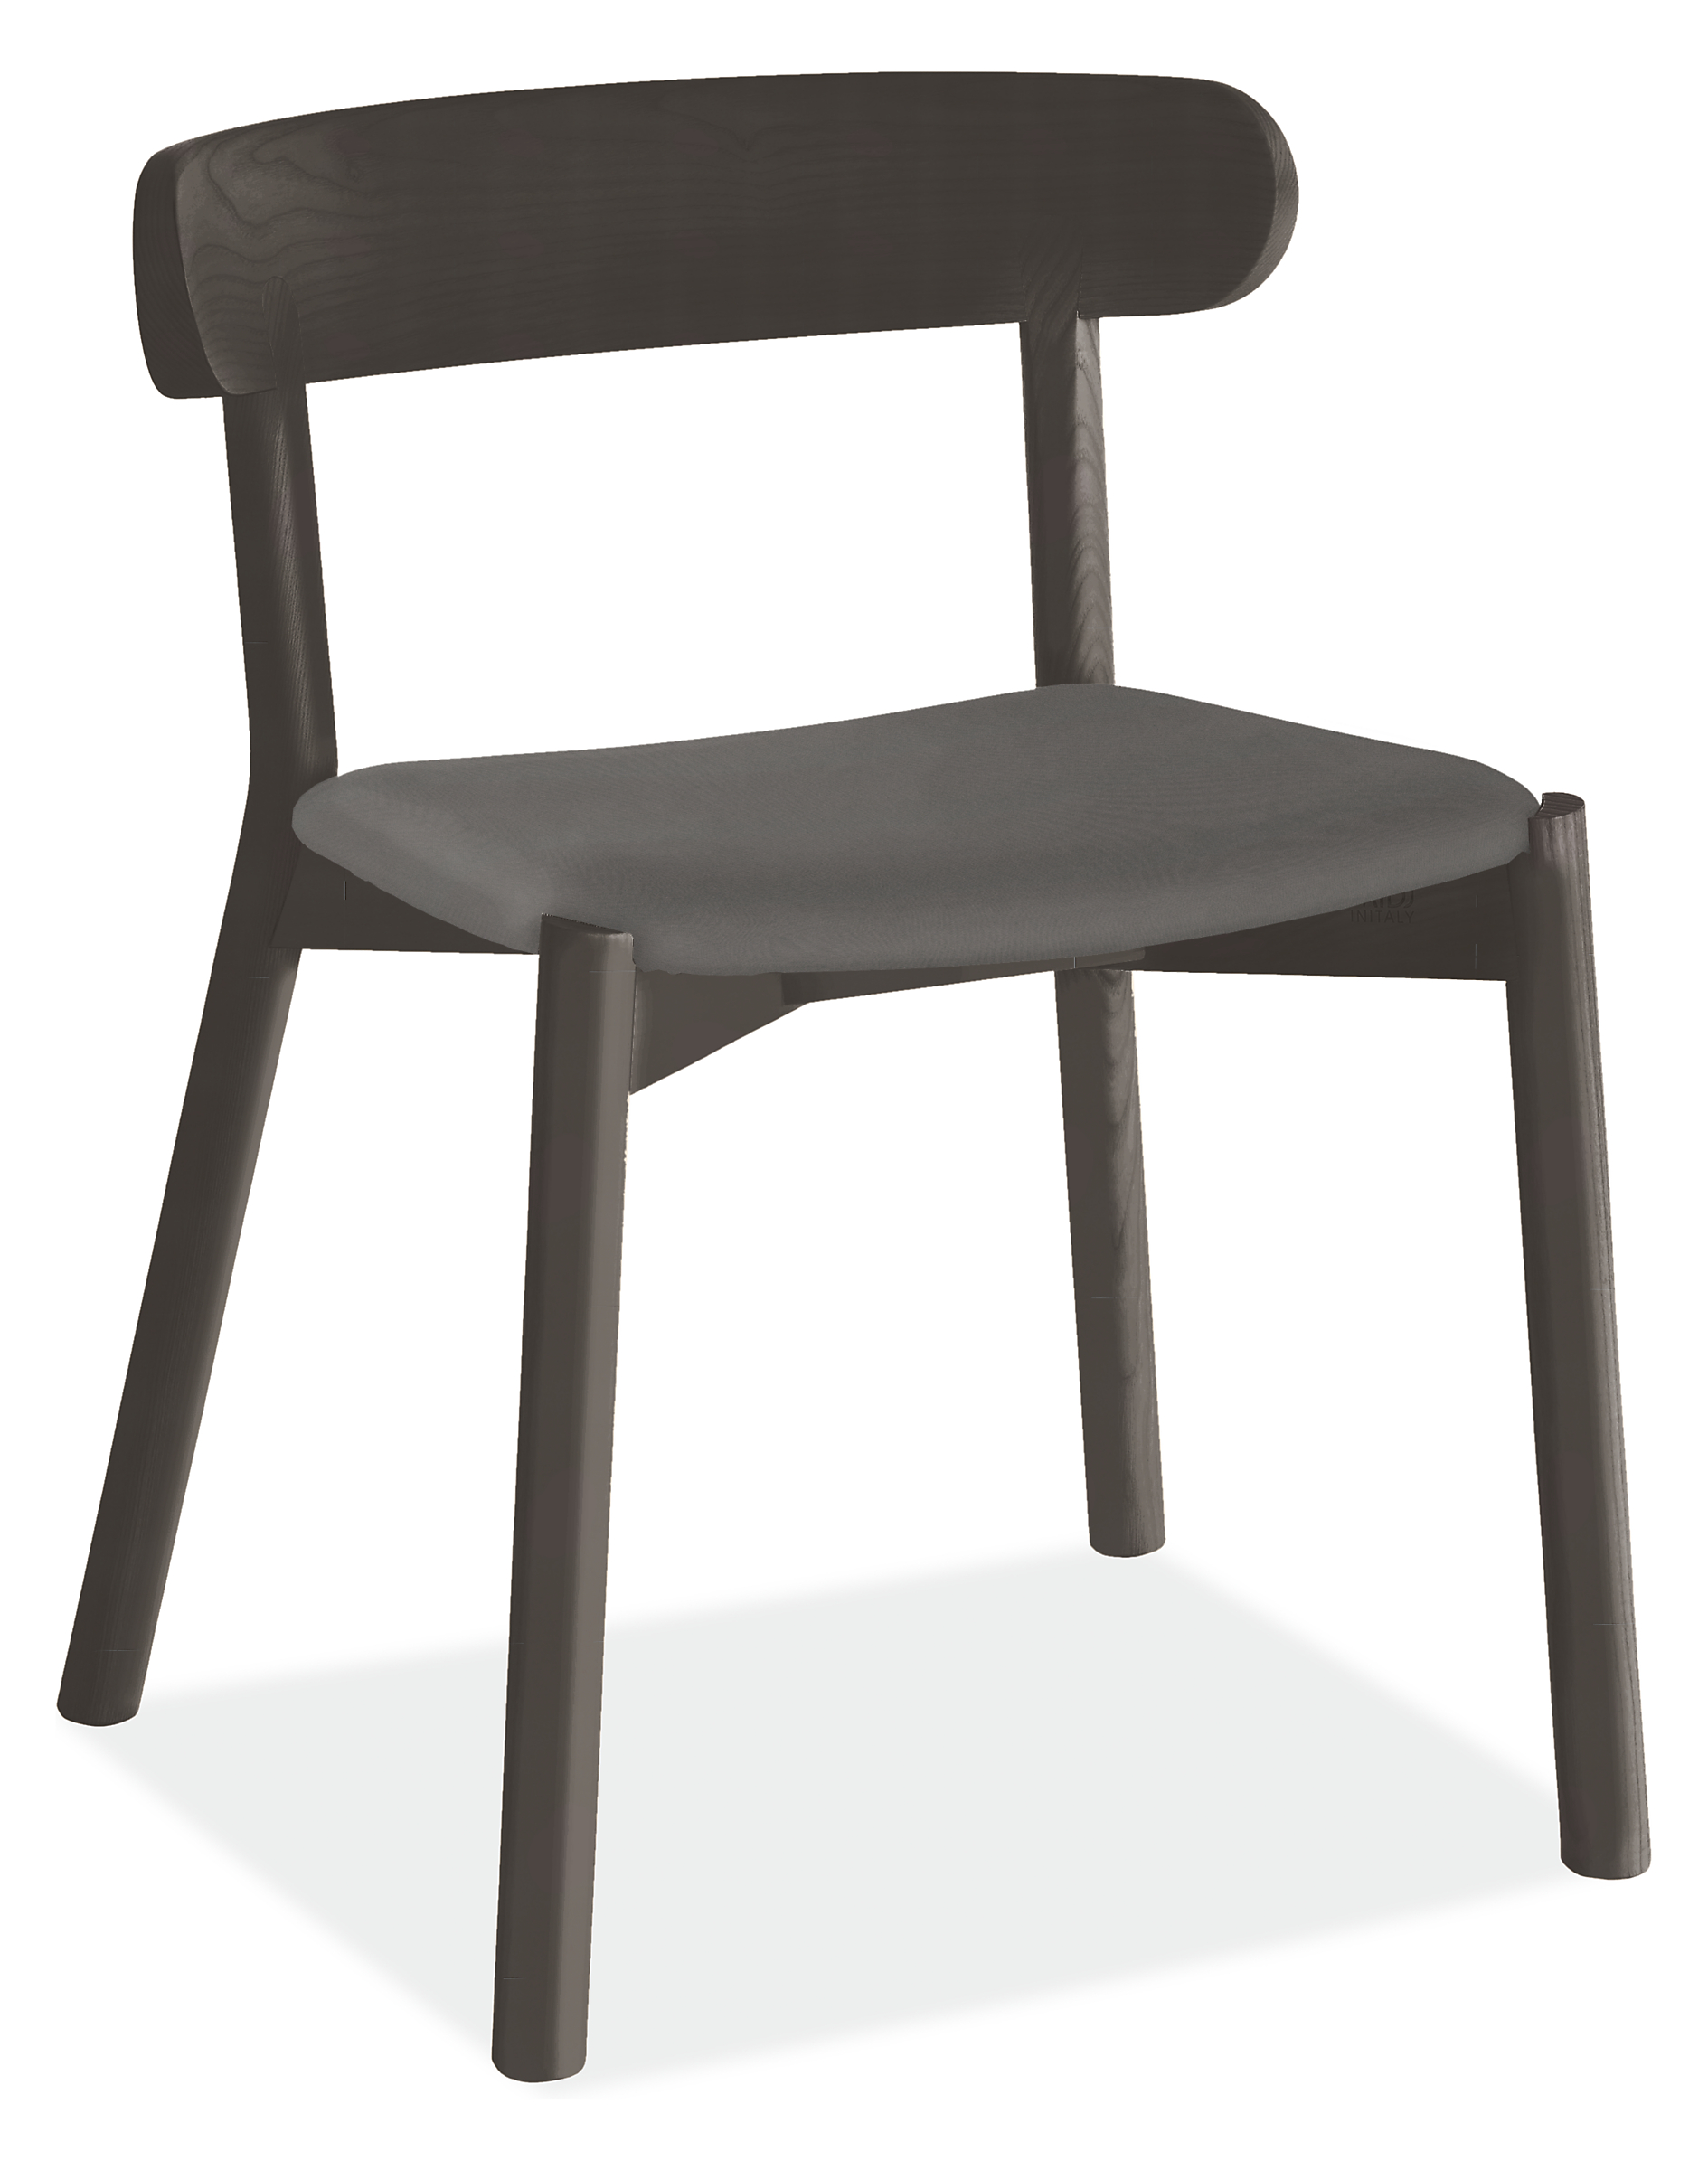 Erwin Chair